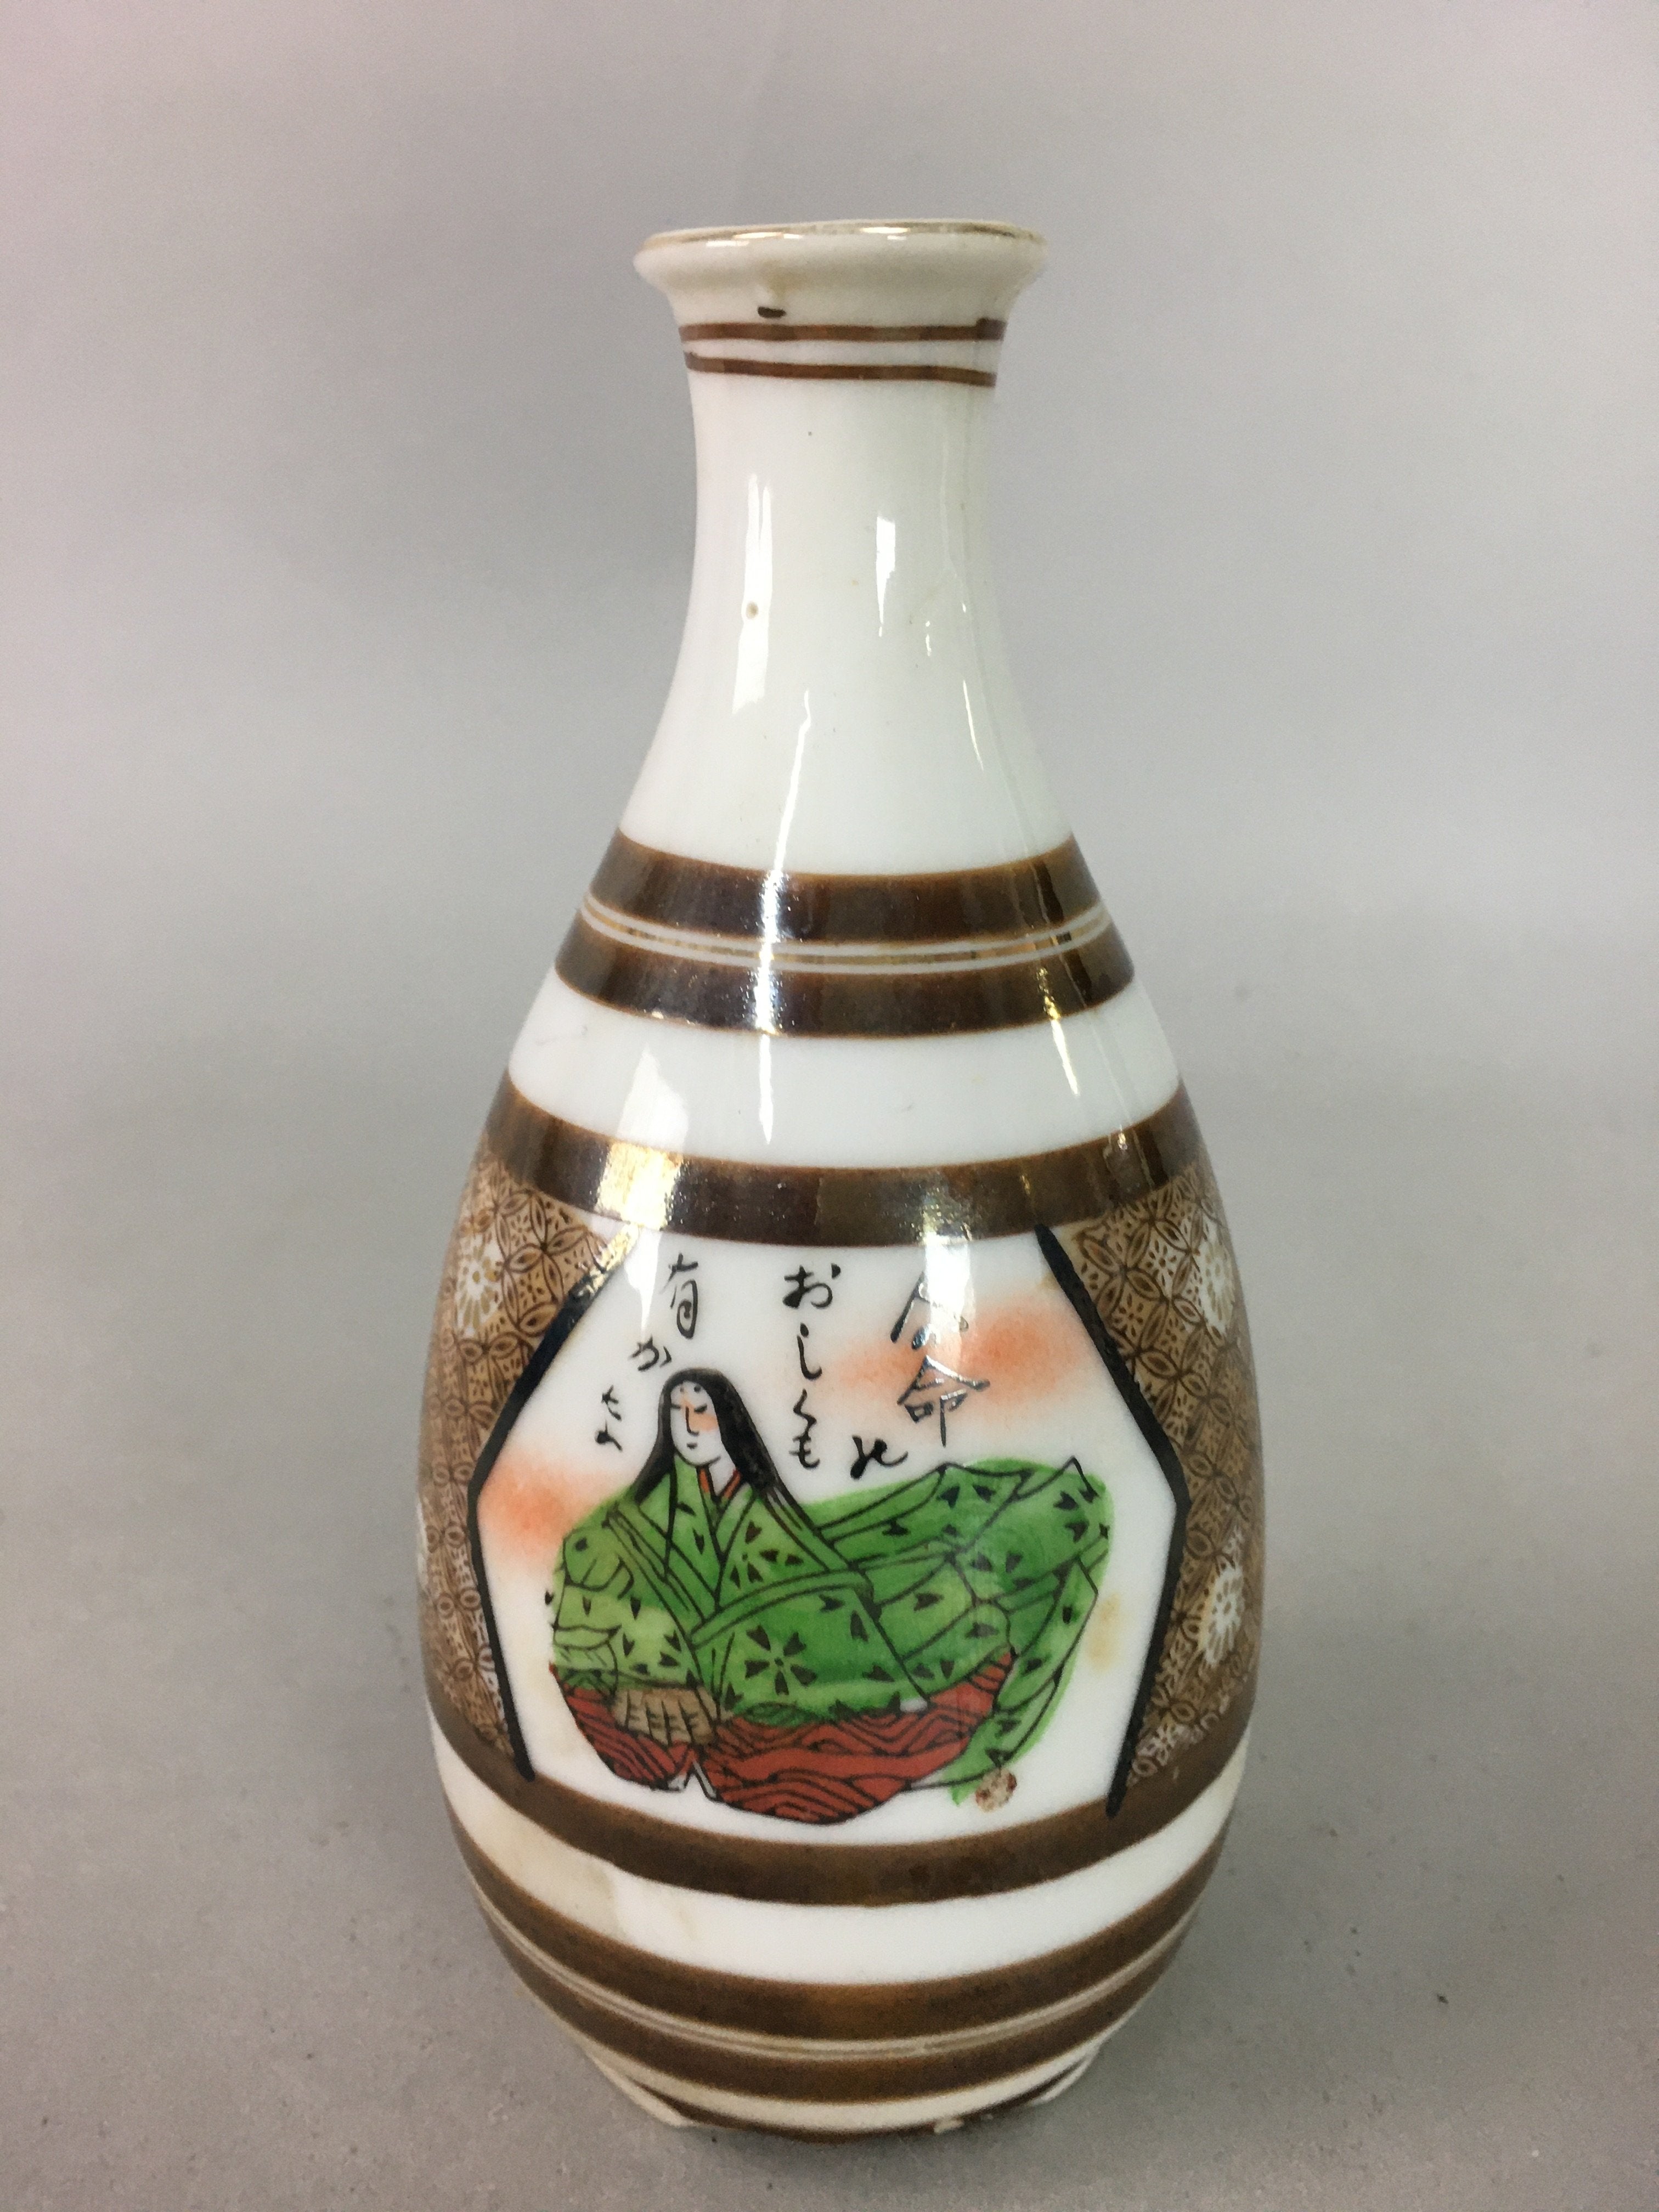 Japanese Porcelain Sake Bottle Kutani ware Vtg Tokkuri Poem Kimono TS228